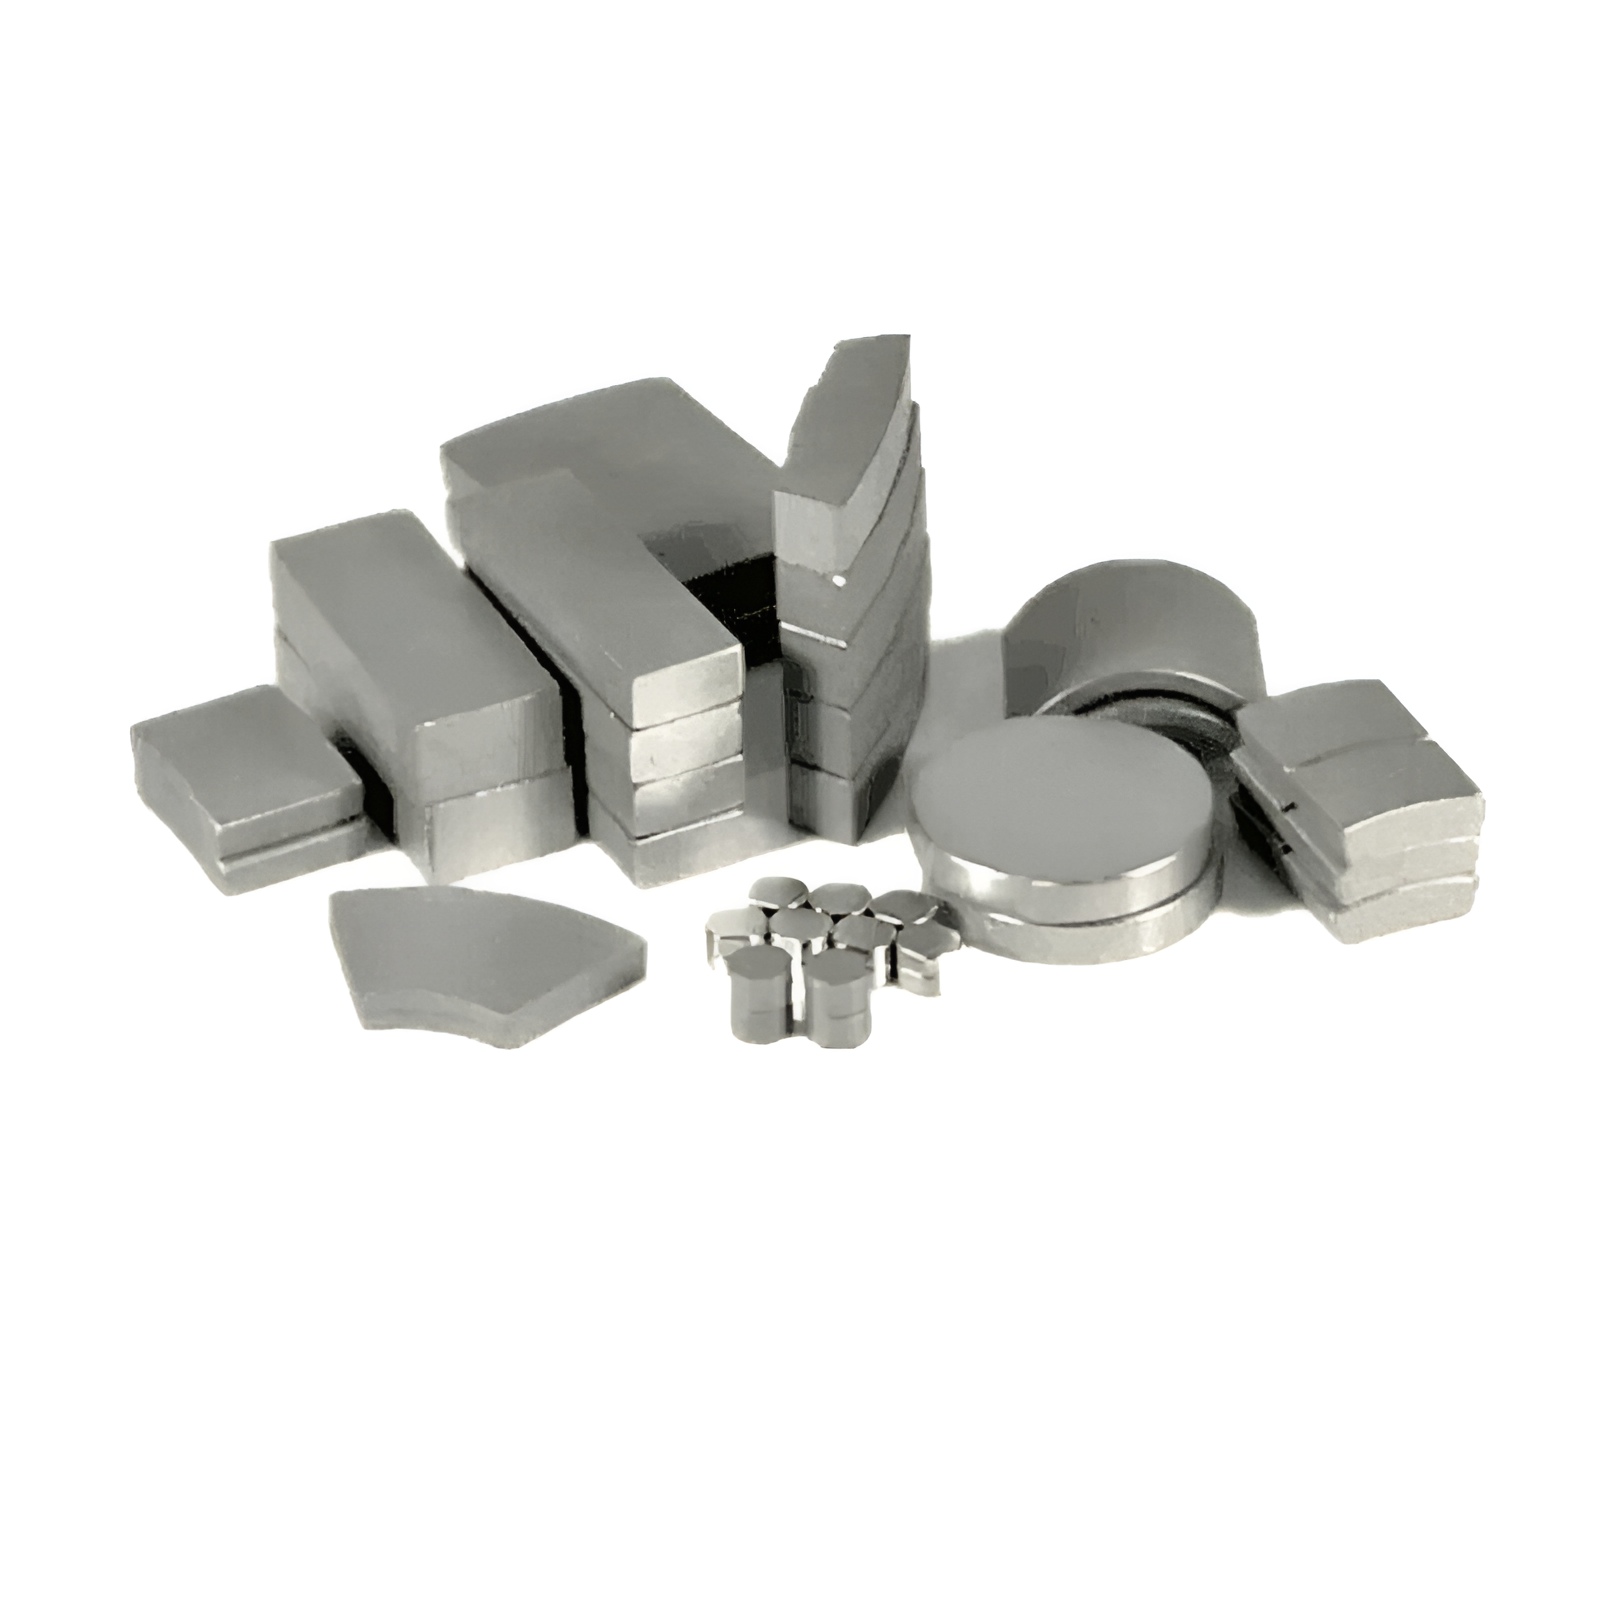 different size Samarium cobalt magnets